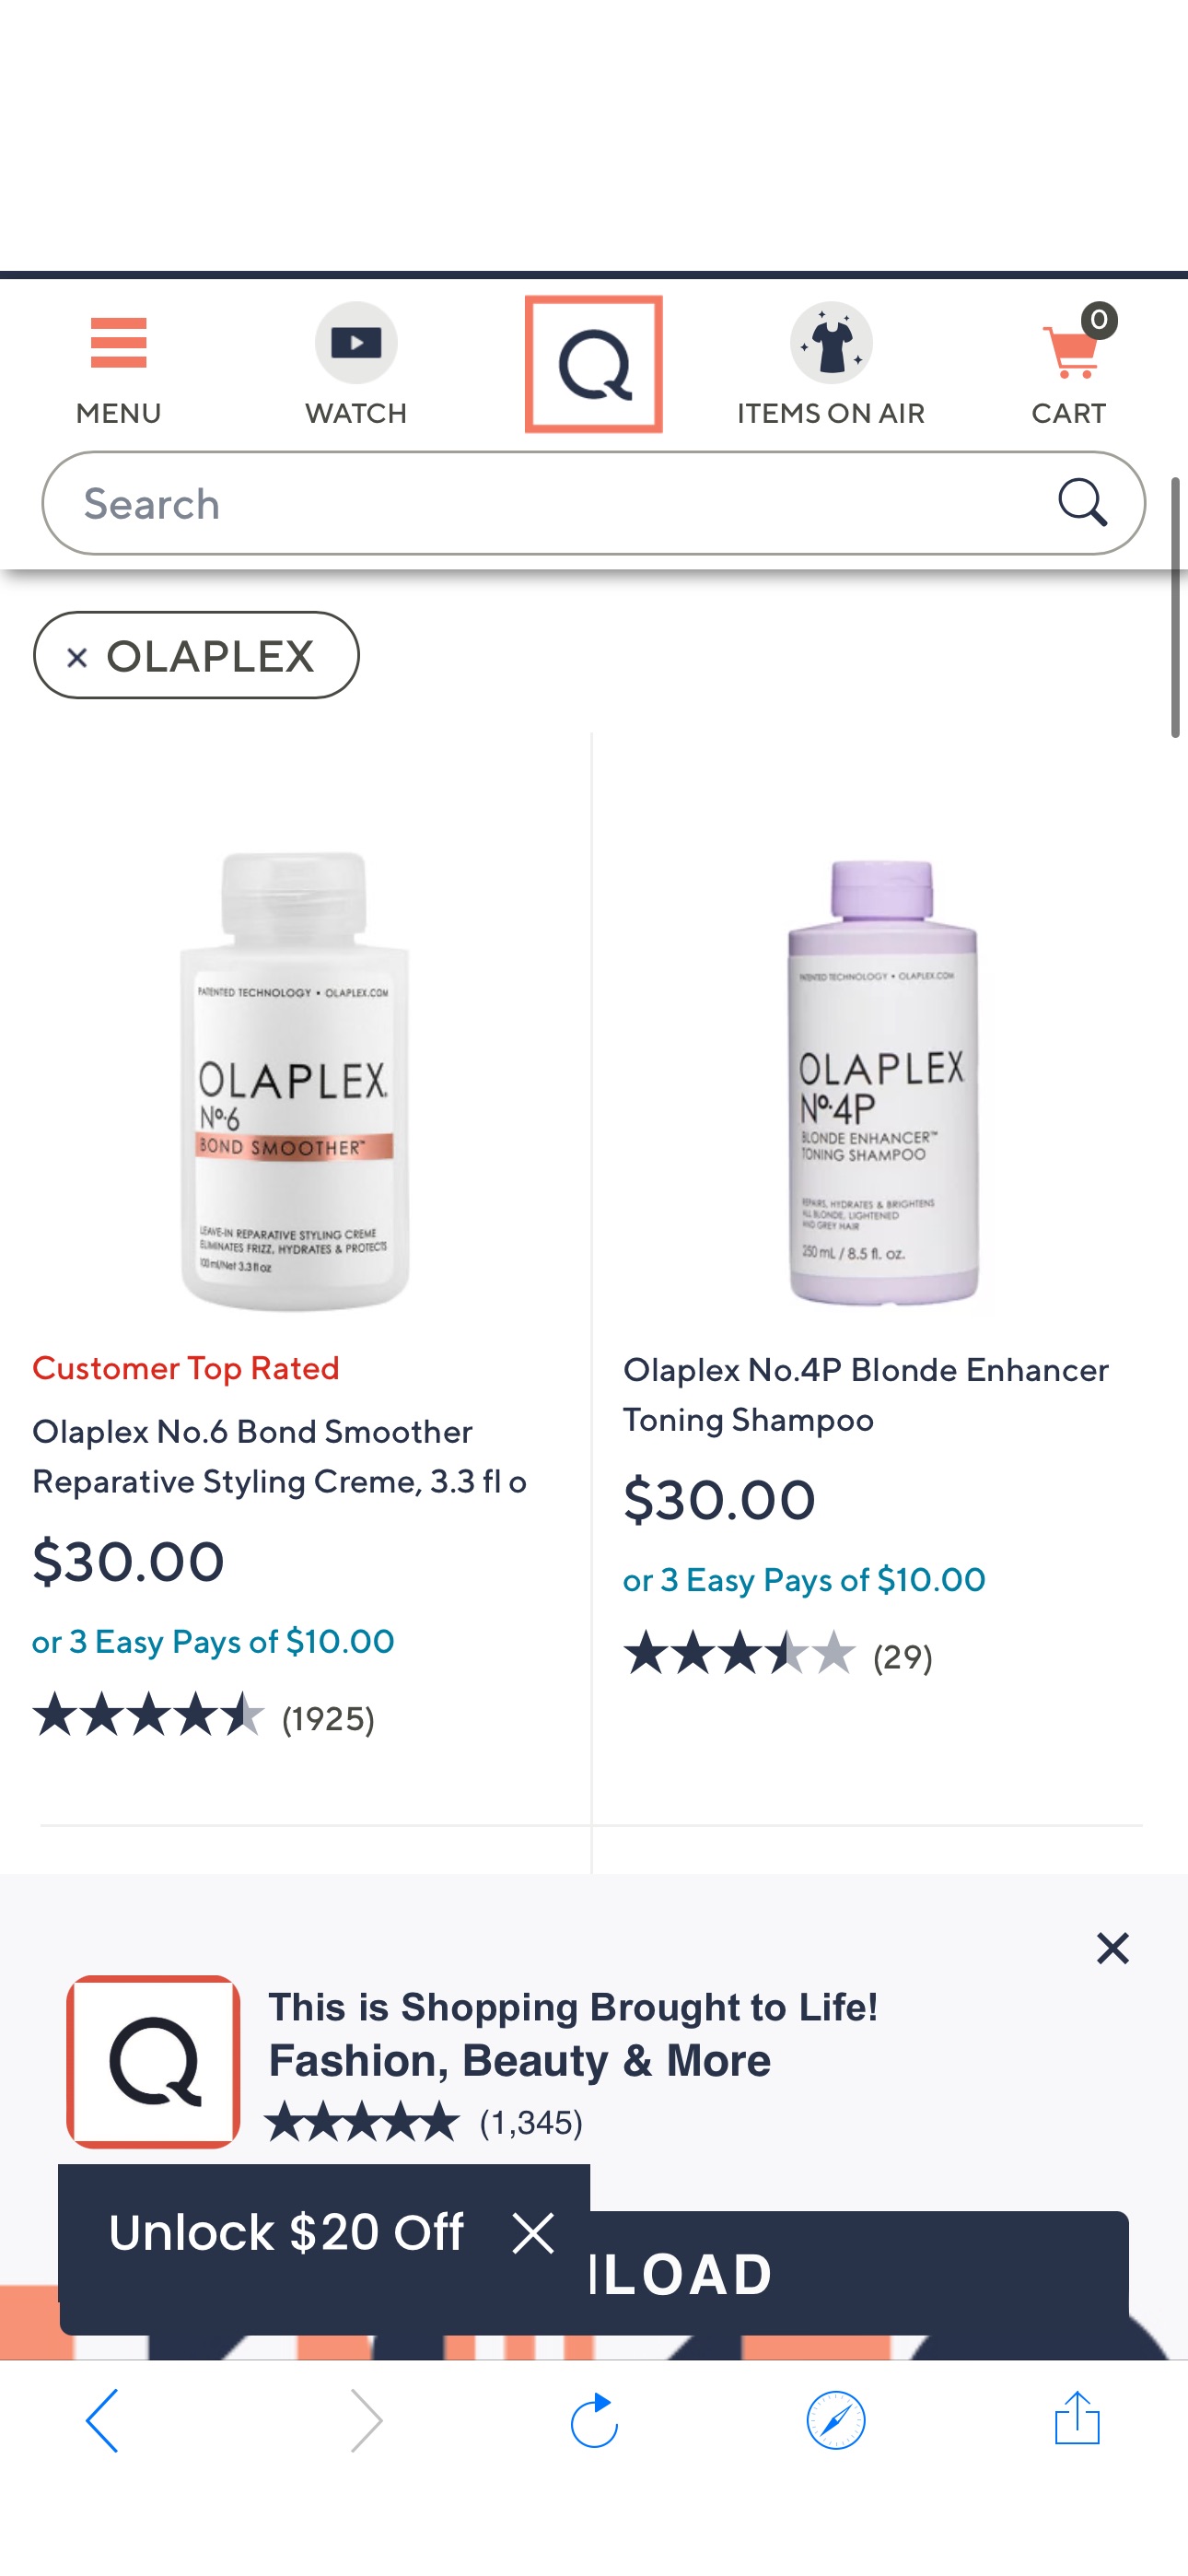 OLAPLEX Shampoo & Hair Treatments - QVC.com Olaplex $20 off $40
Use code HELLO20
(New Email)